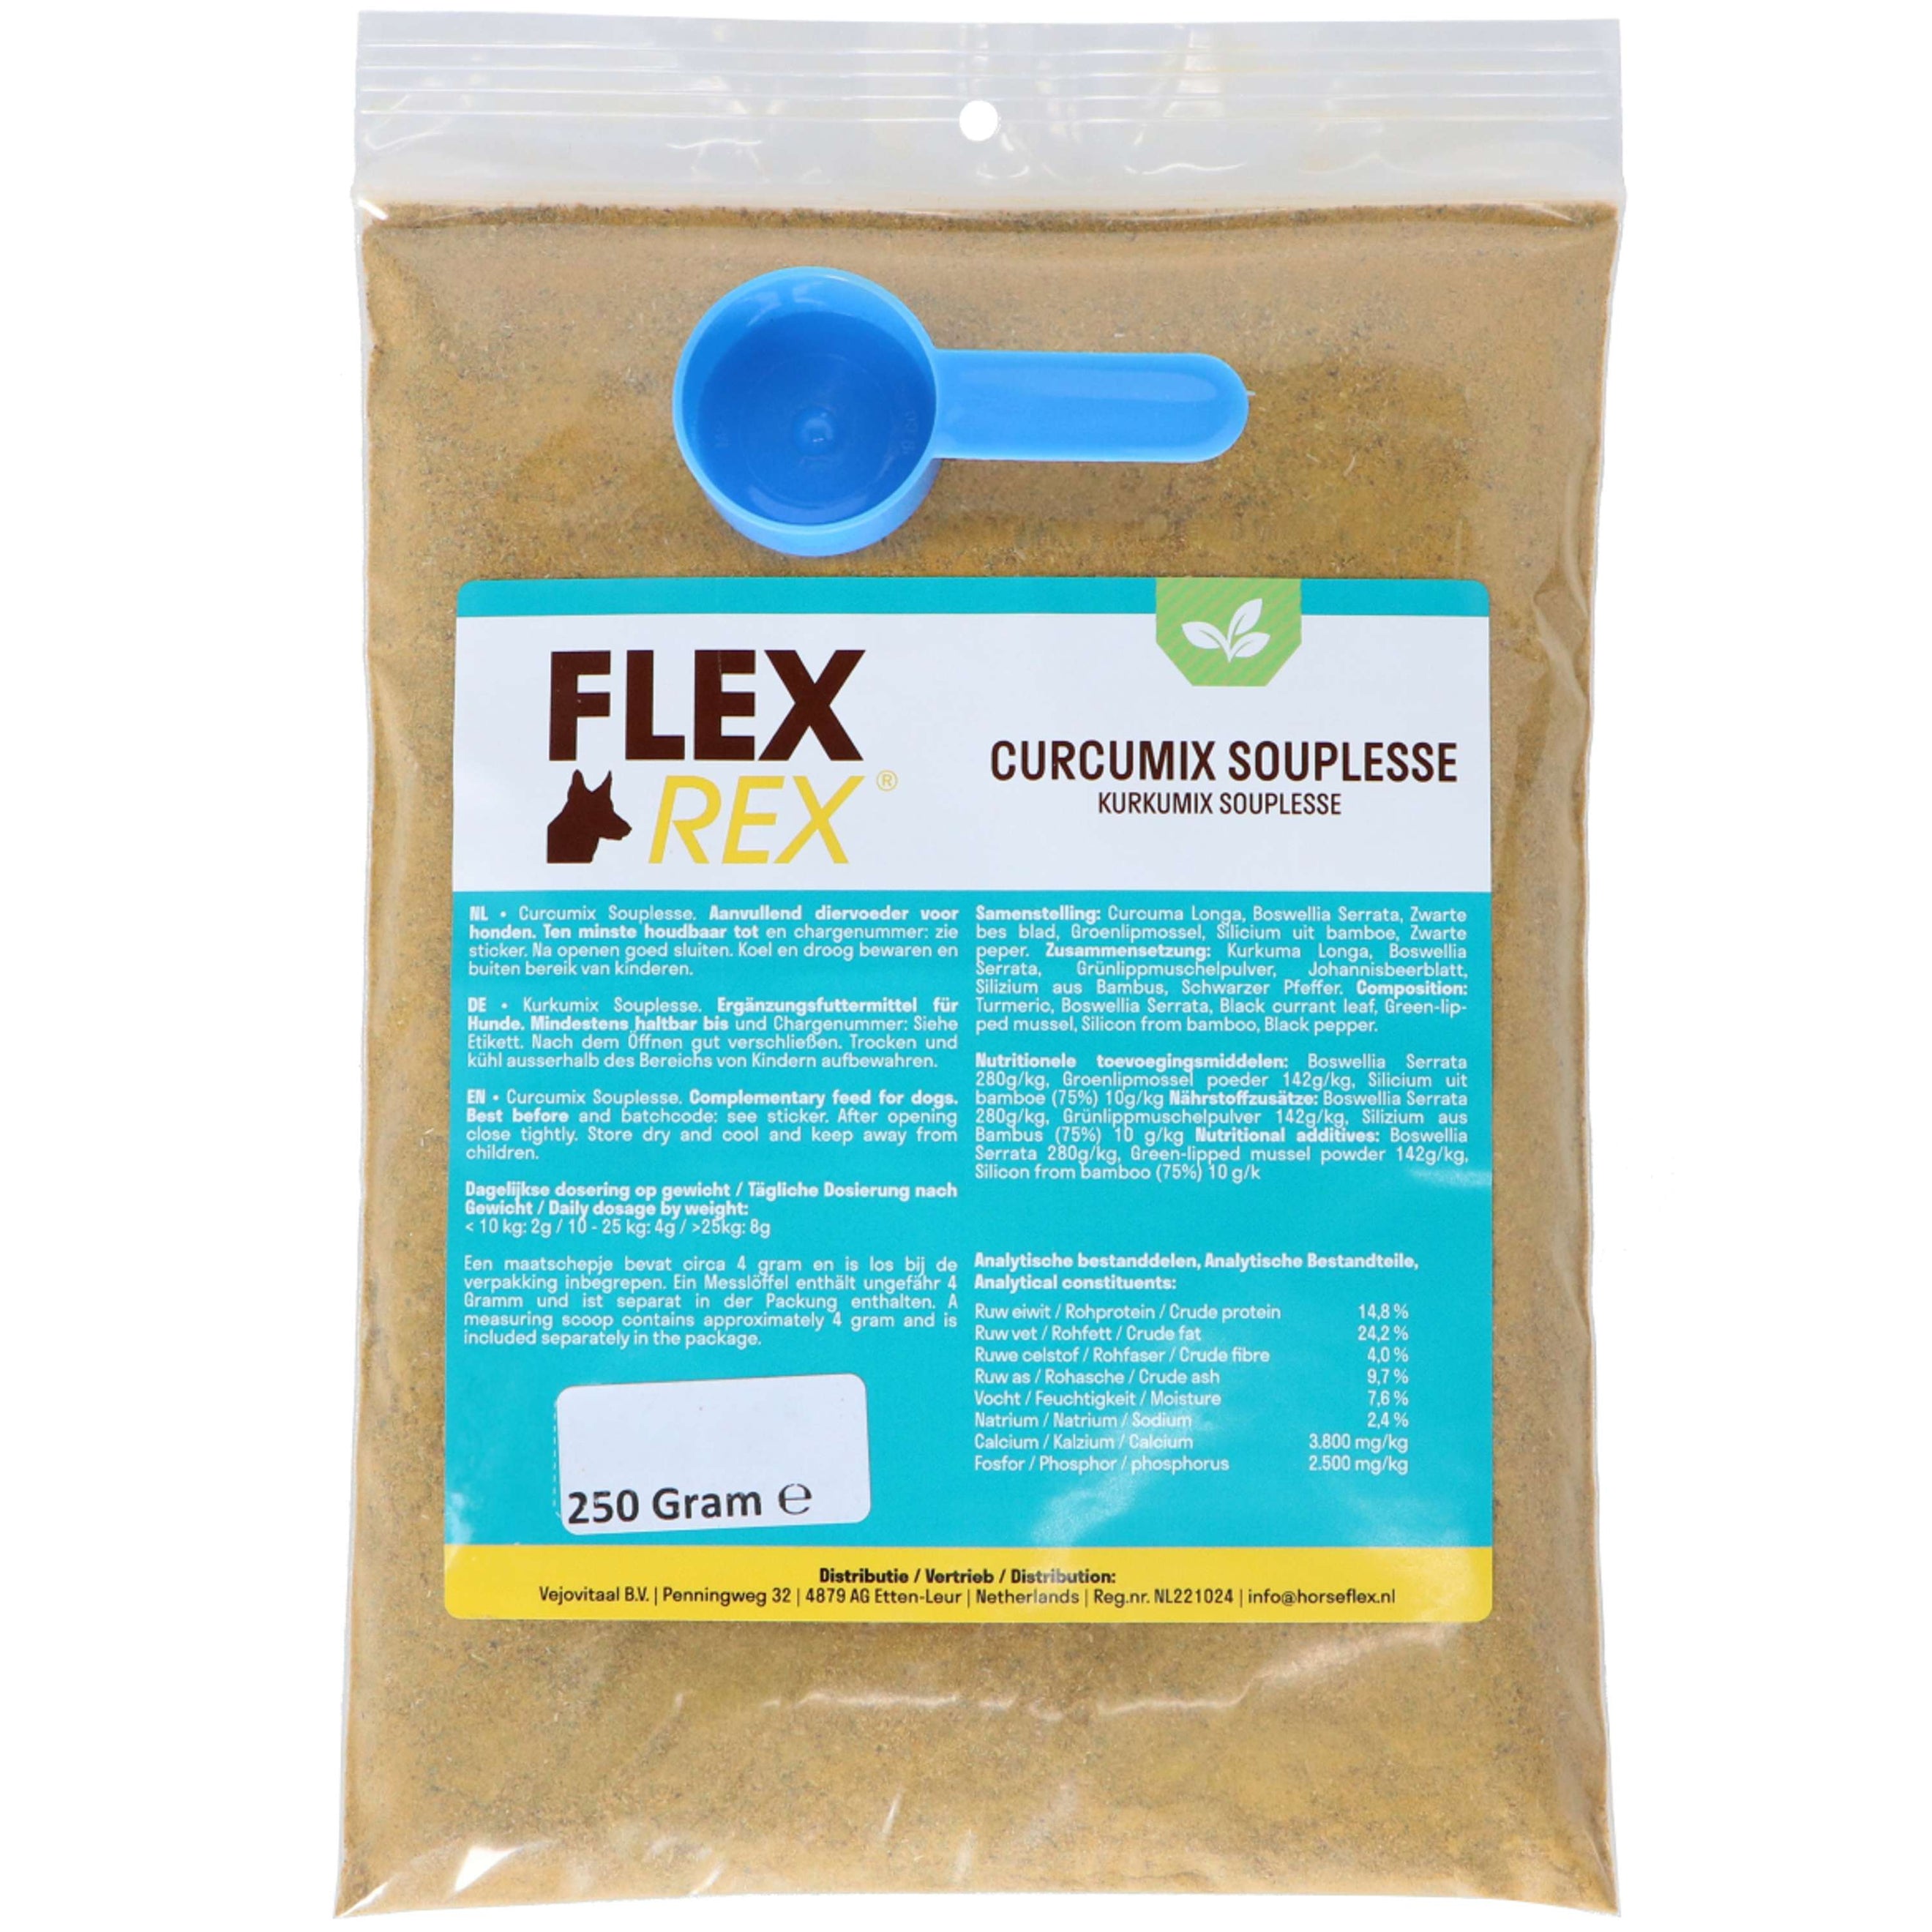 Flexrex Curcumix Souplesse Recharge